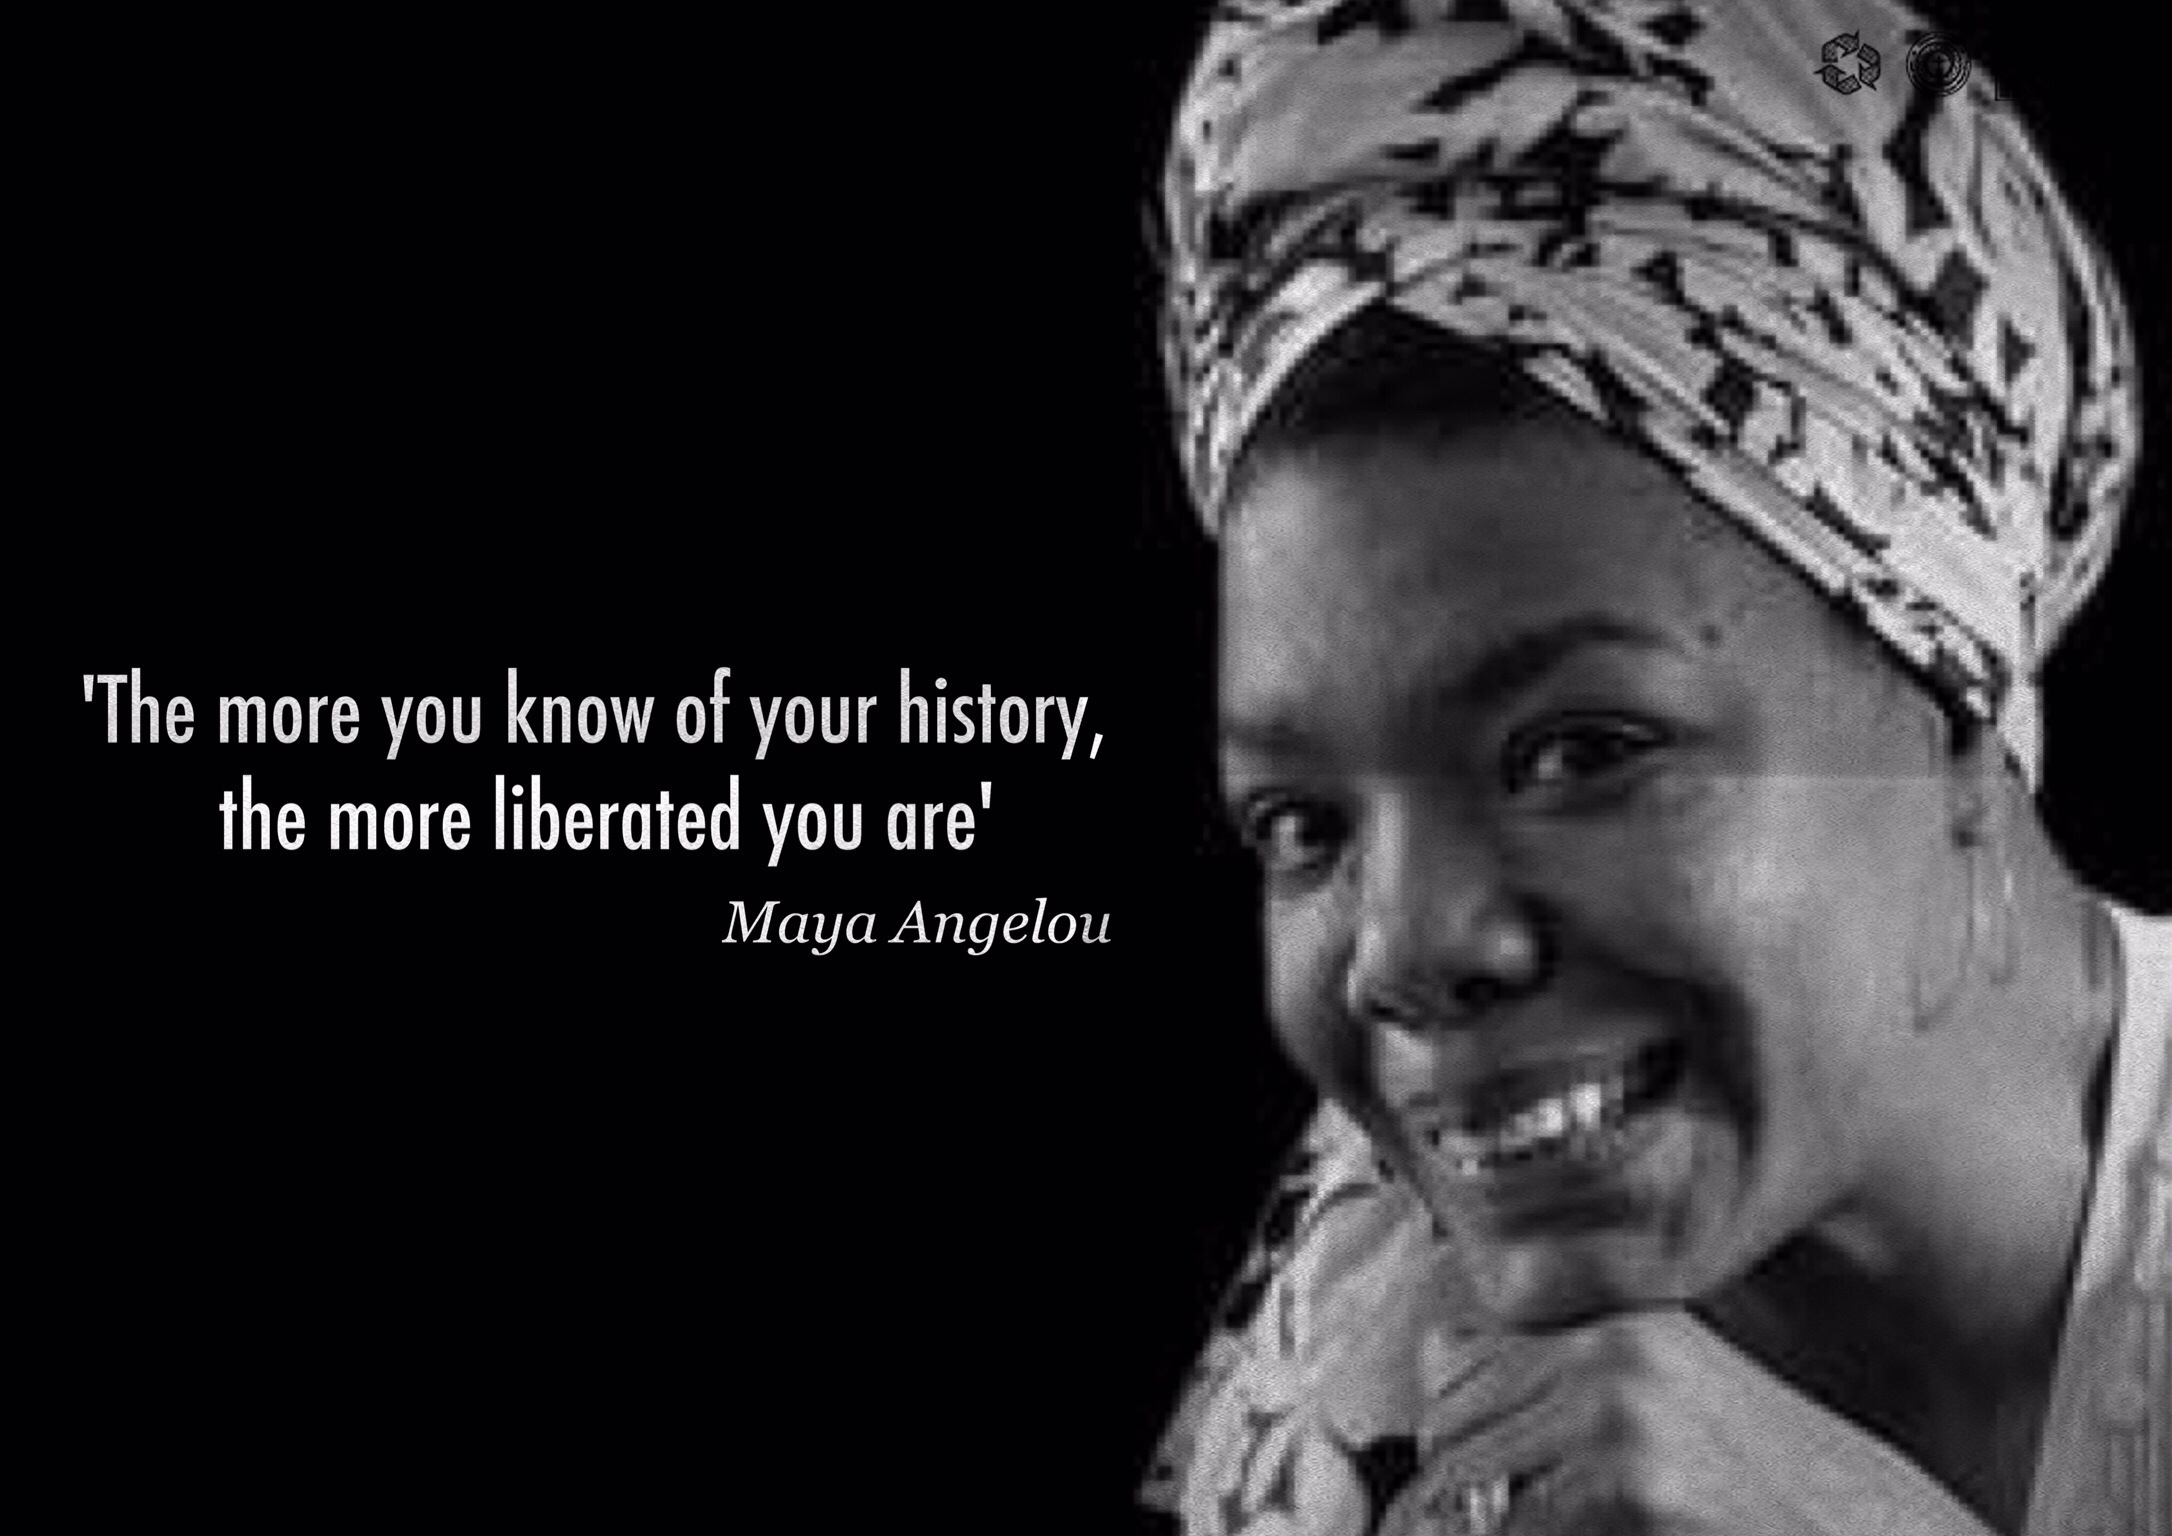 Maya Angelou History quote poster